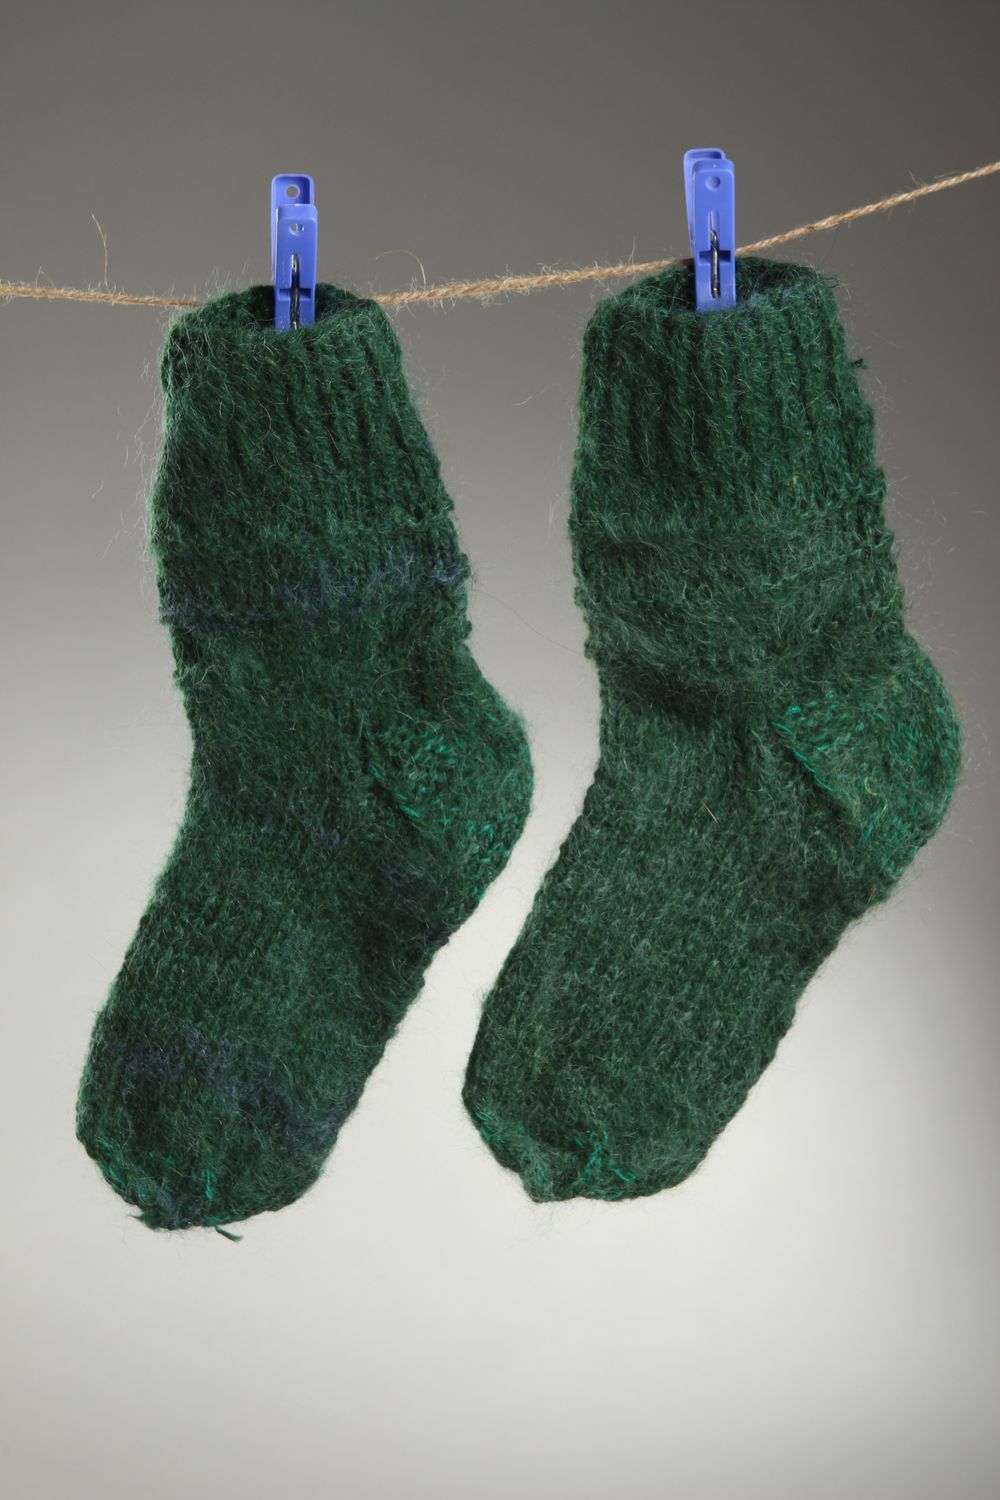 Handmade green woolen socks knitted socks winter clothes Christmas gift ideas photo 1